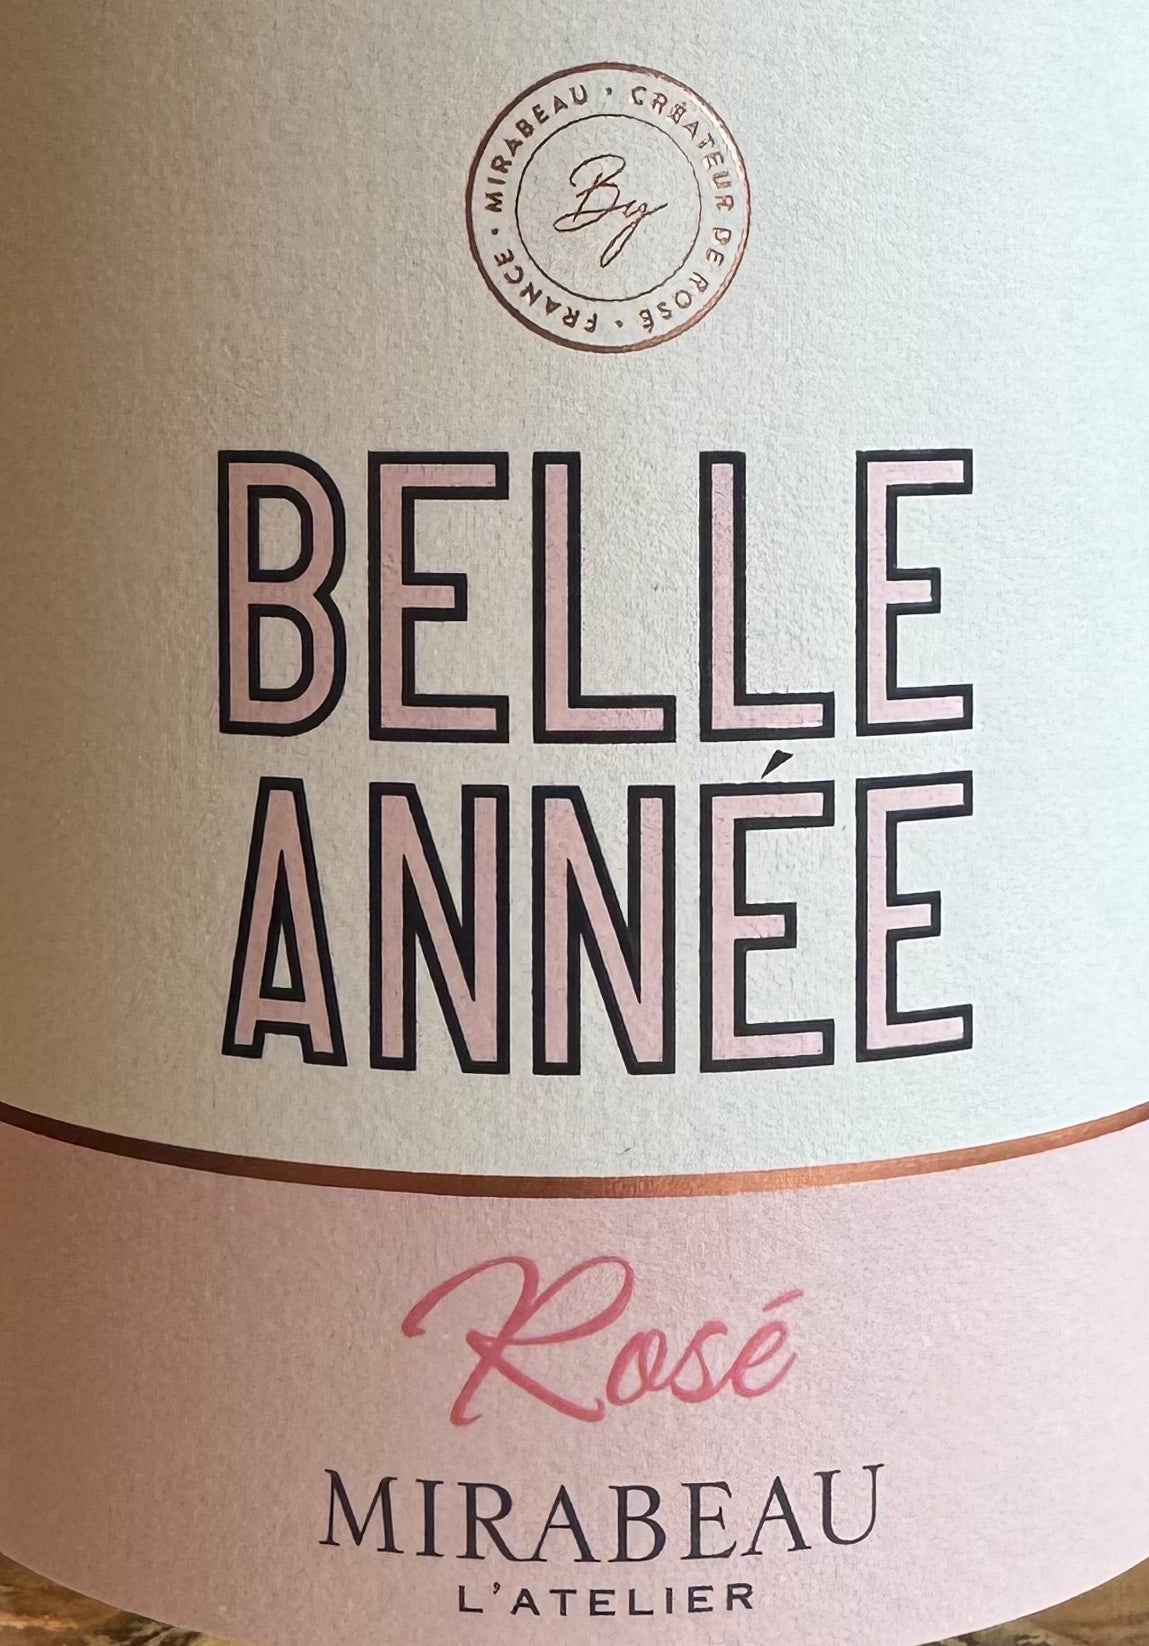 Mirabeau 'Belle Annee' - Rose